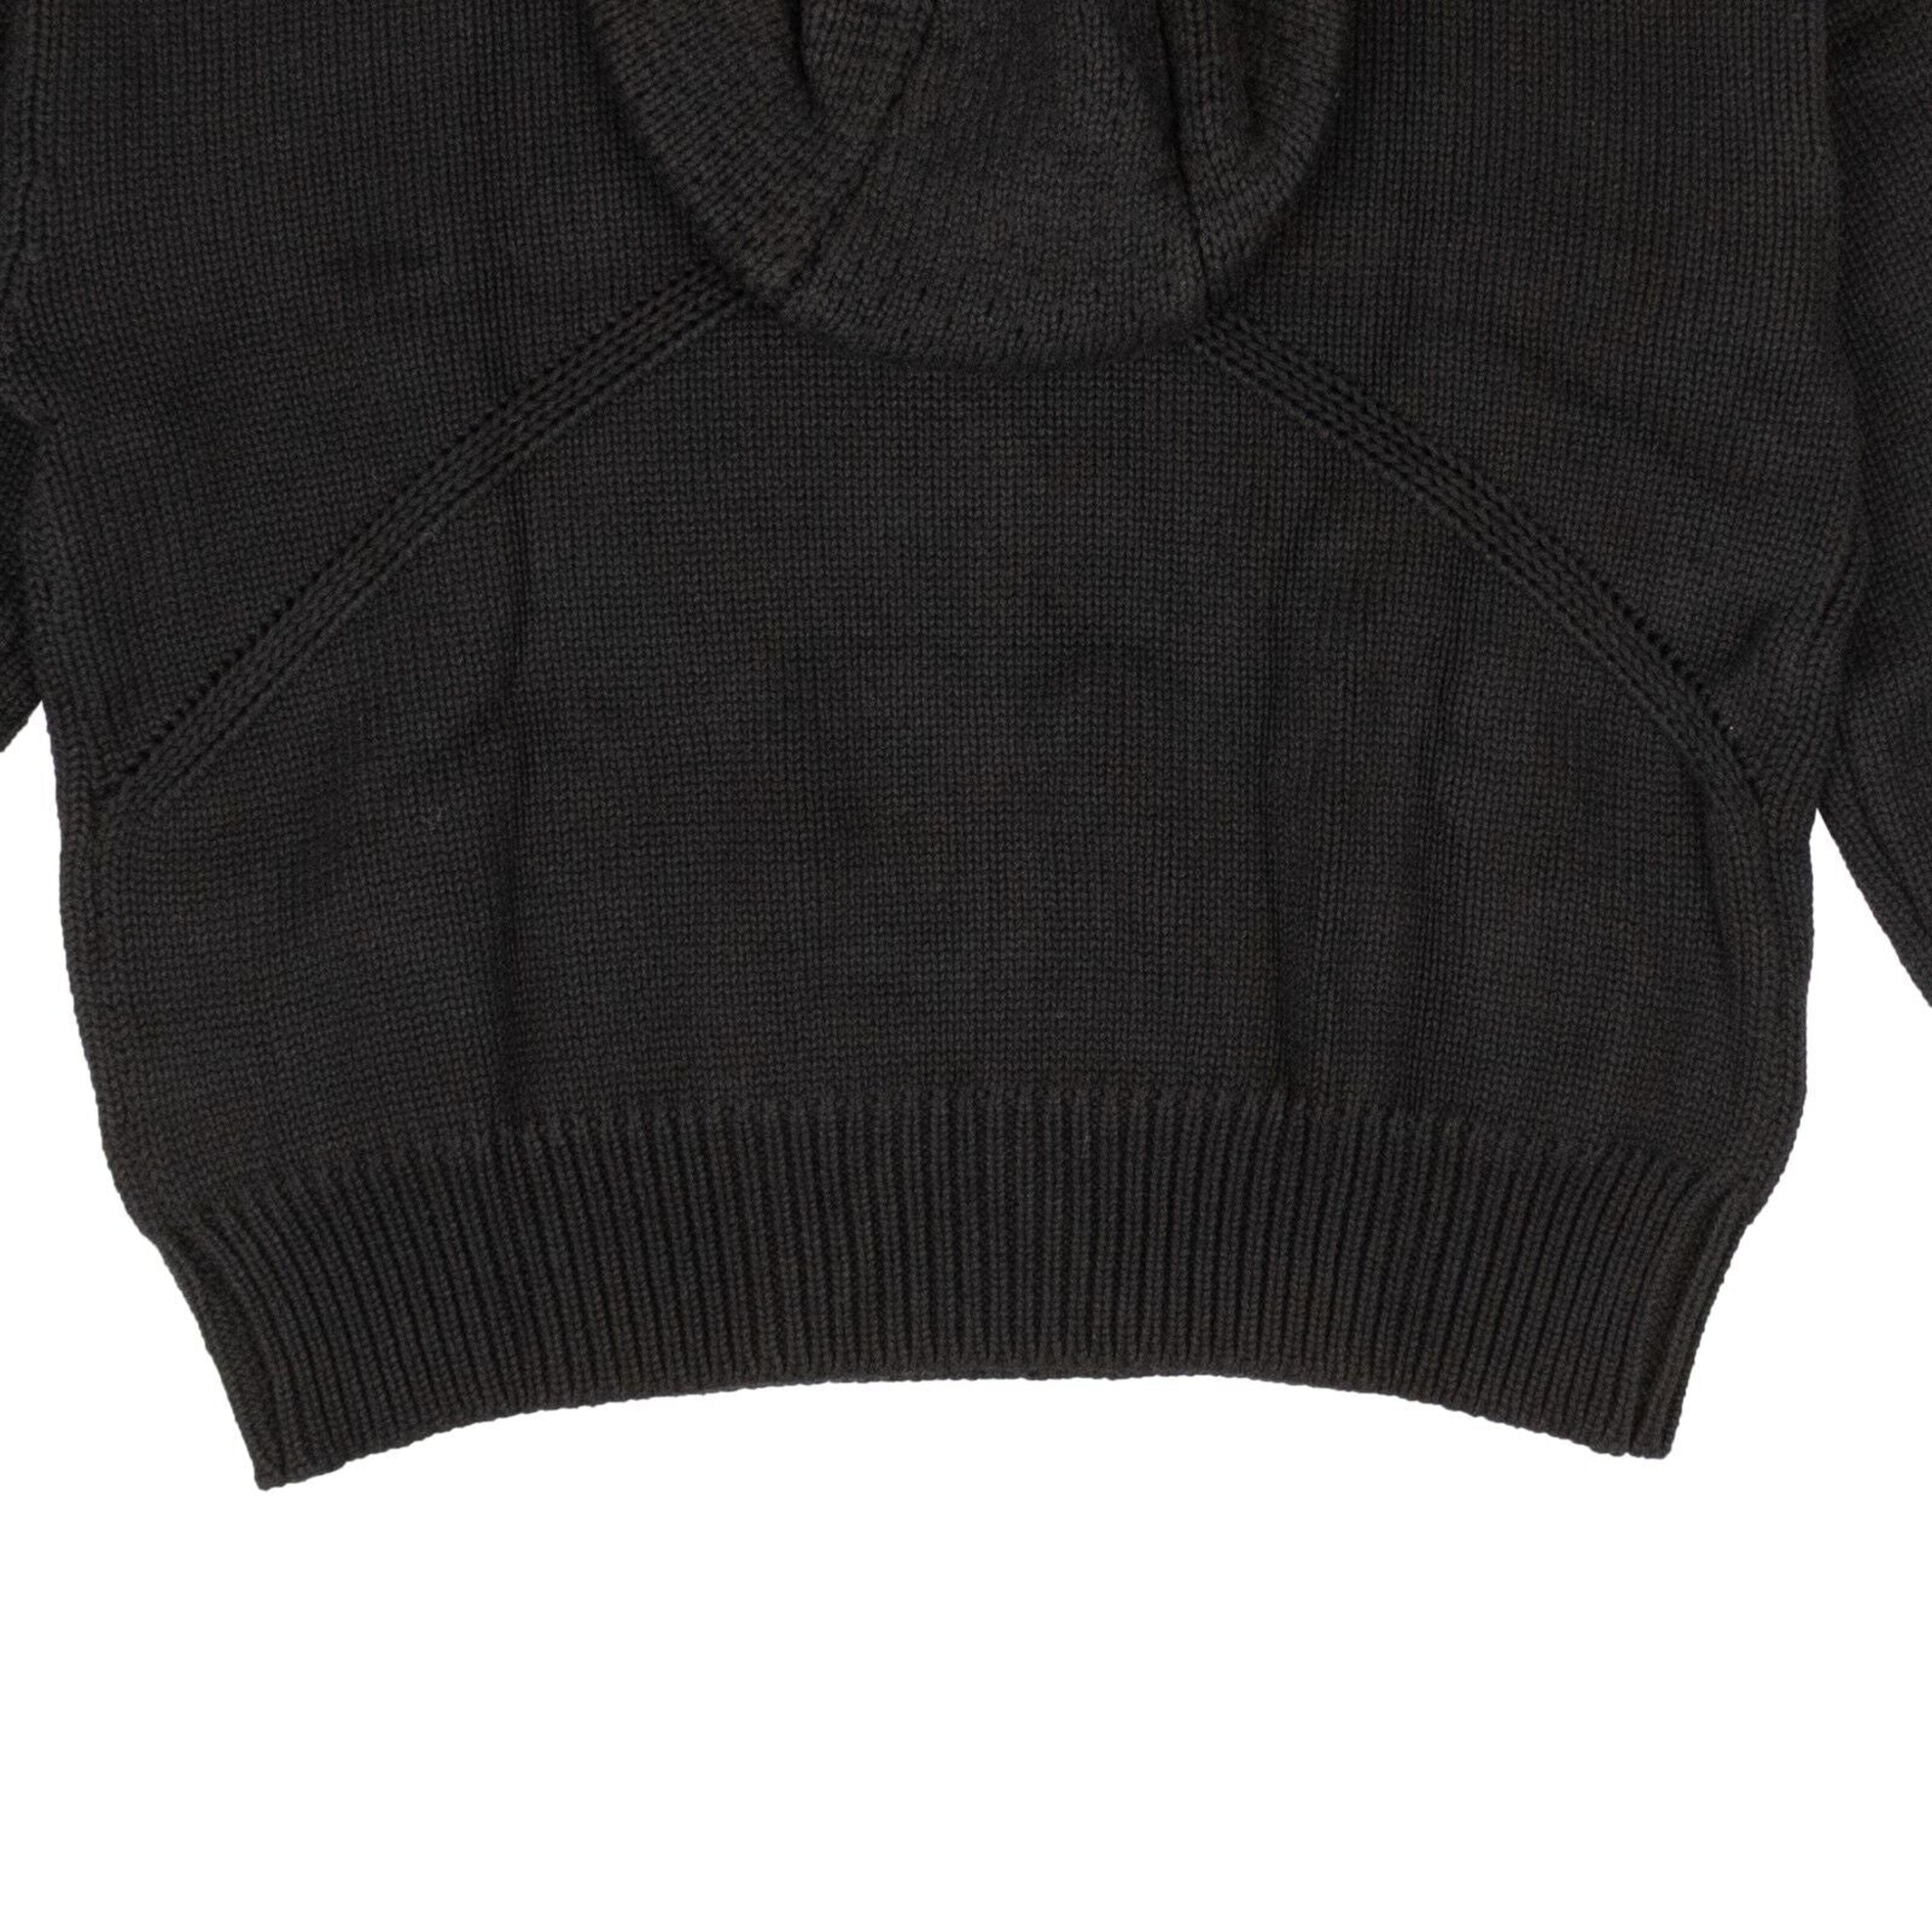 Alternate View 3 of Rhude Cotton Laze Pullover Hoodie Sweatshirt - Black